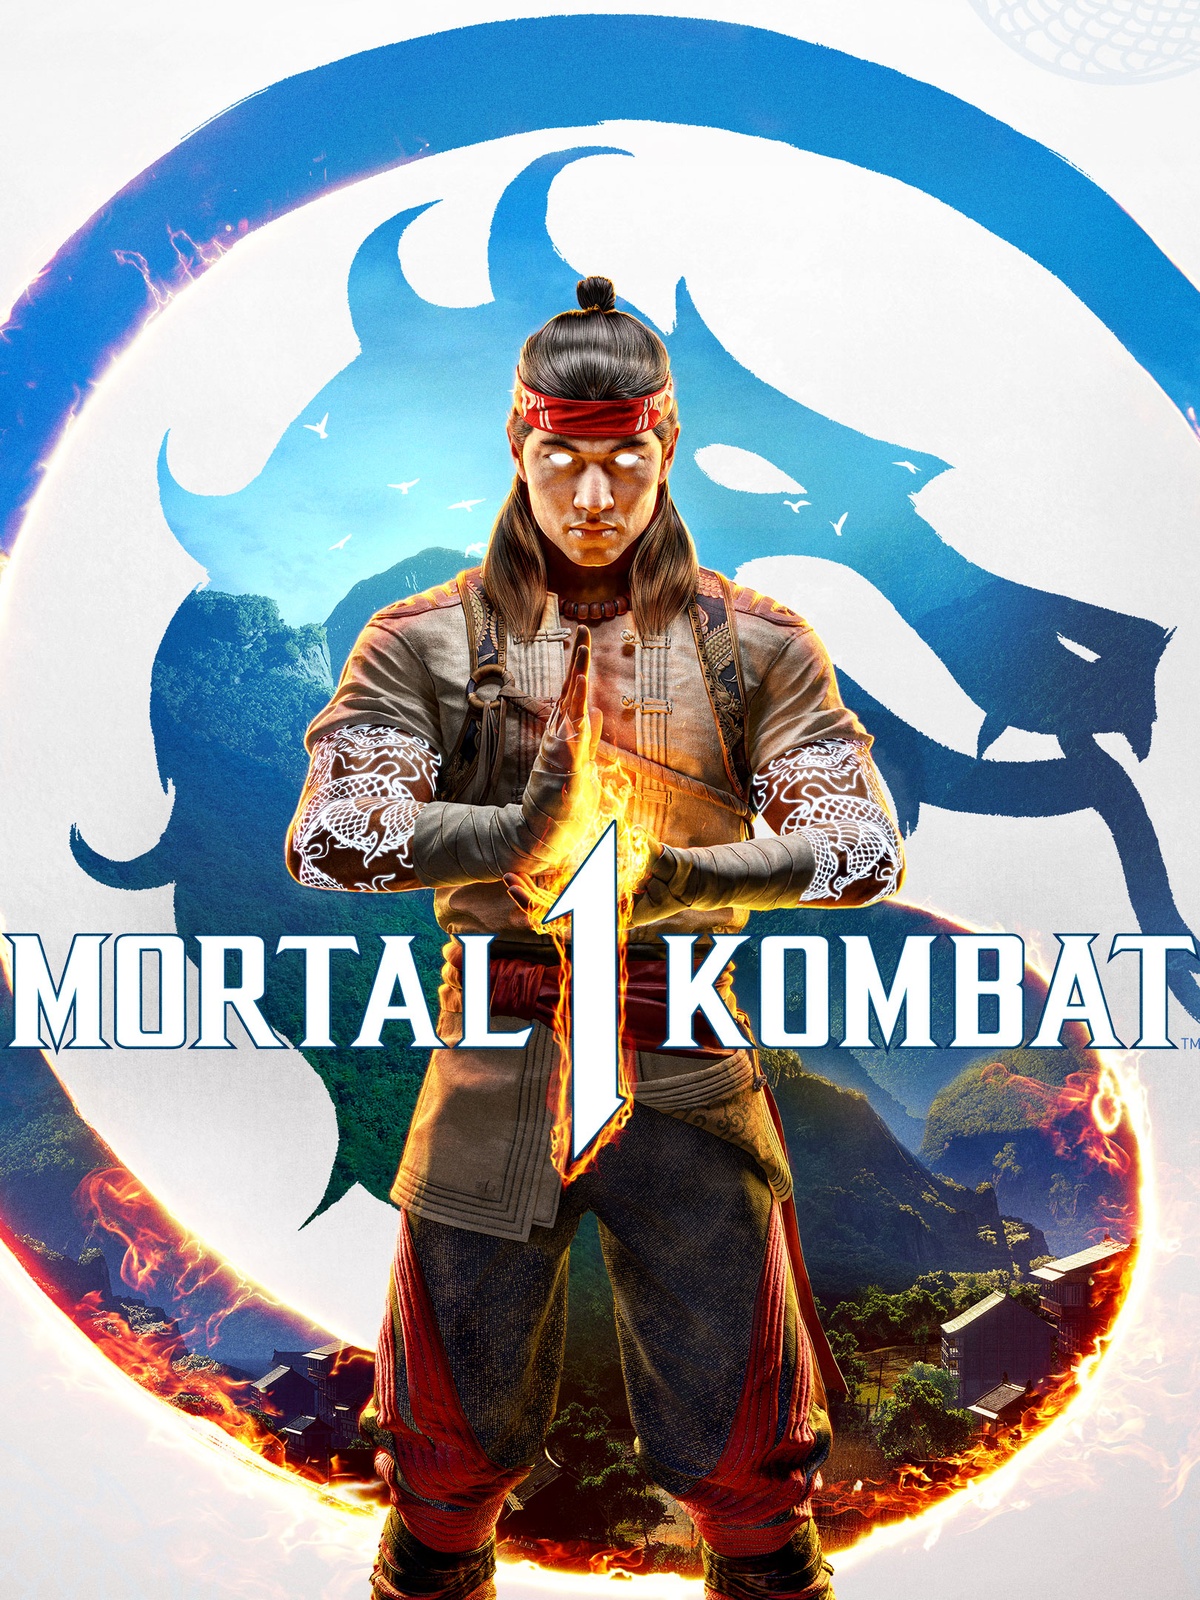 Mortal Kombat 1 | Now on gamescom!